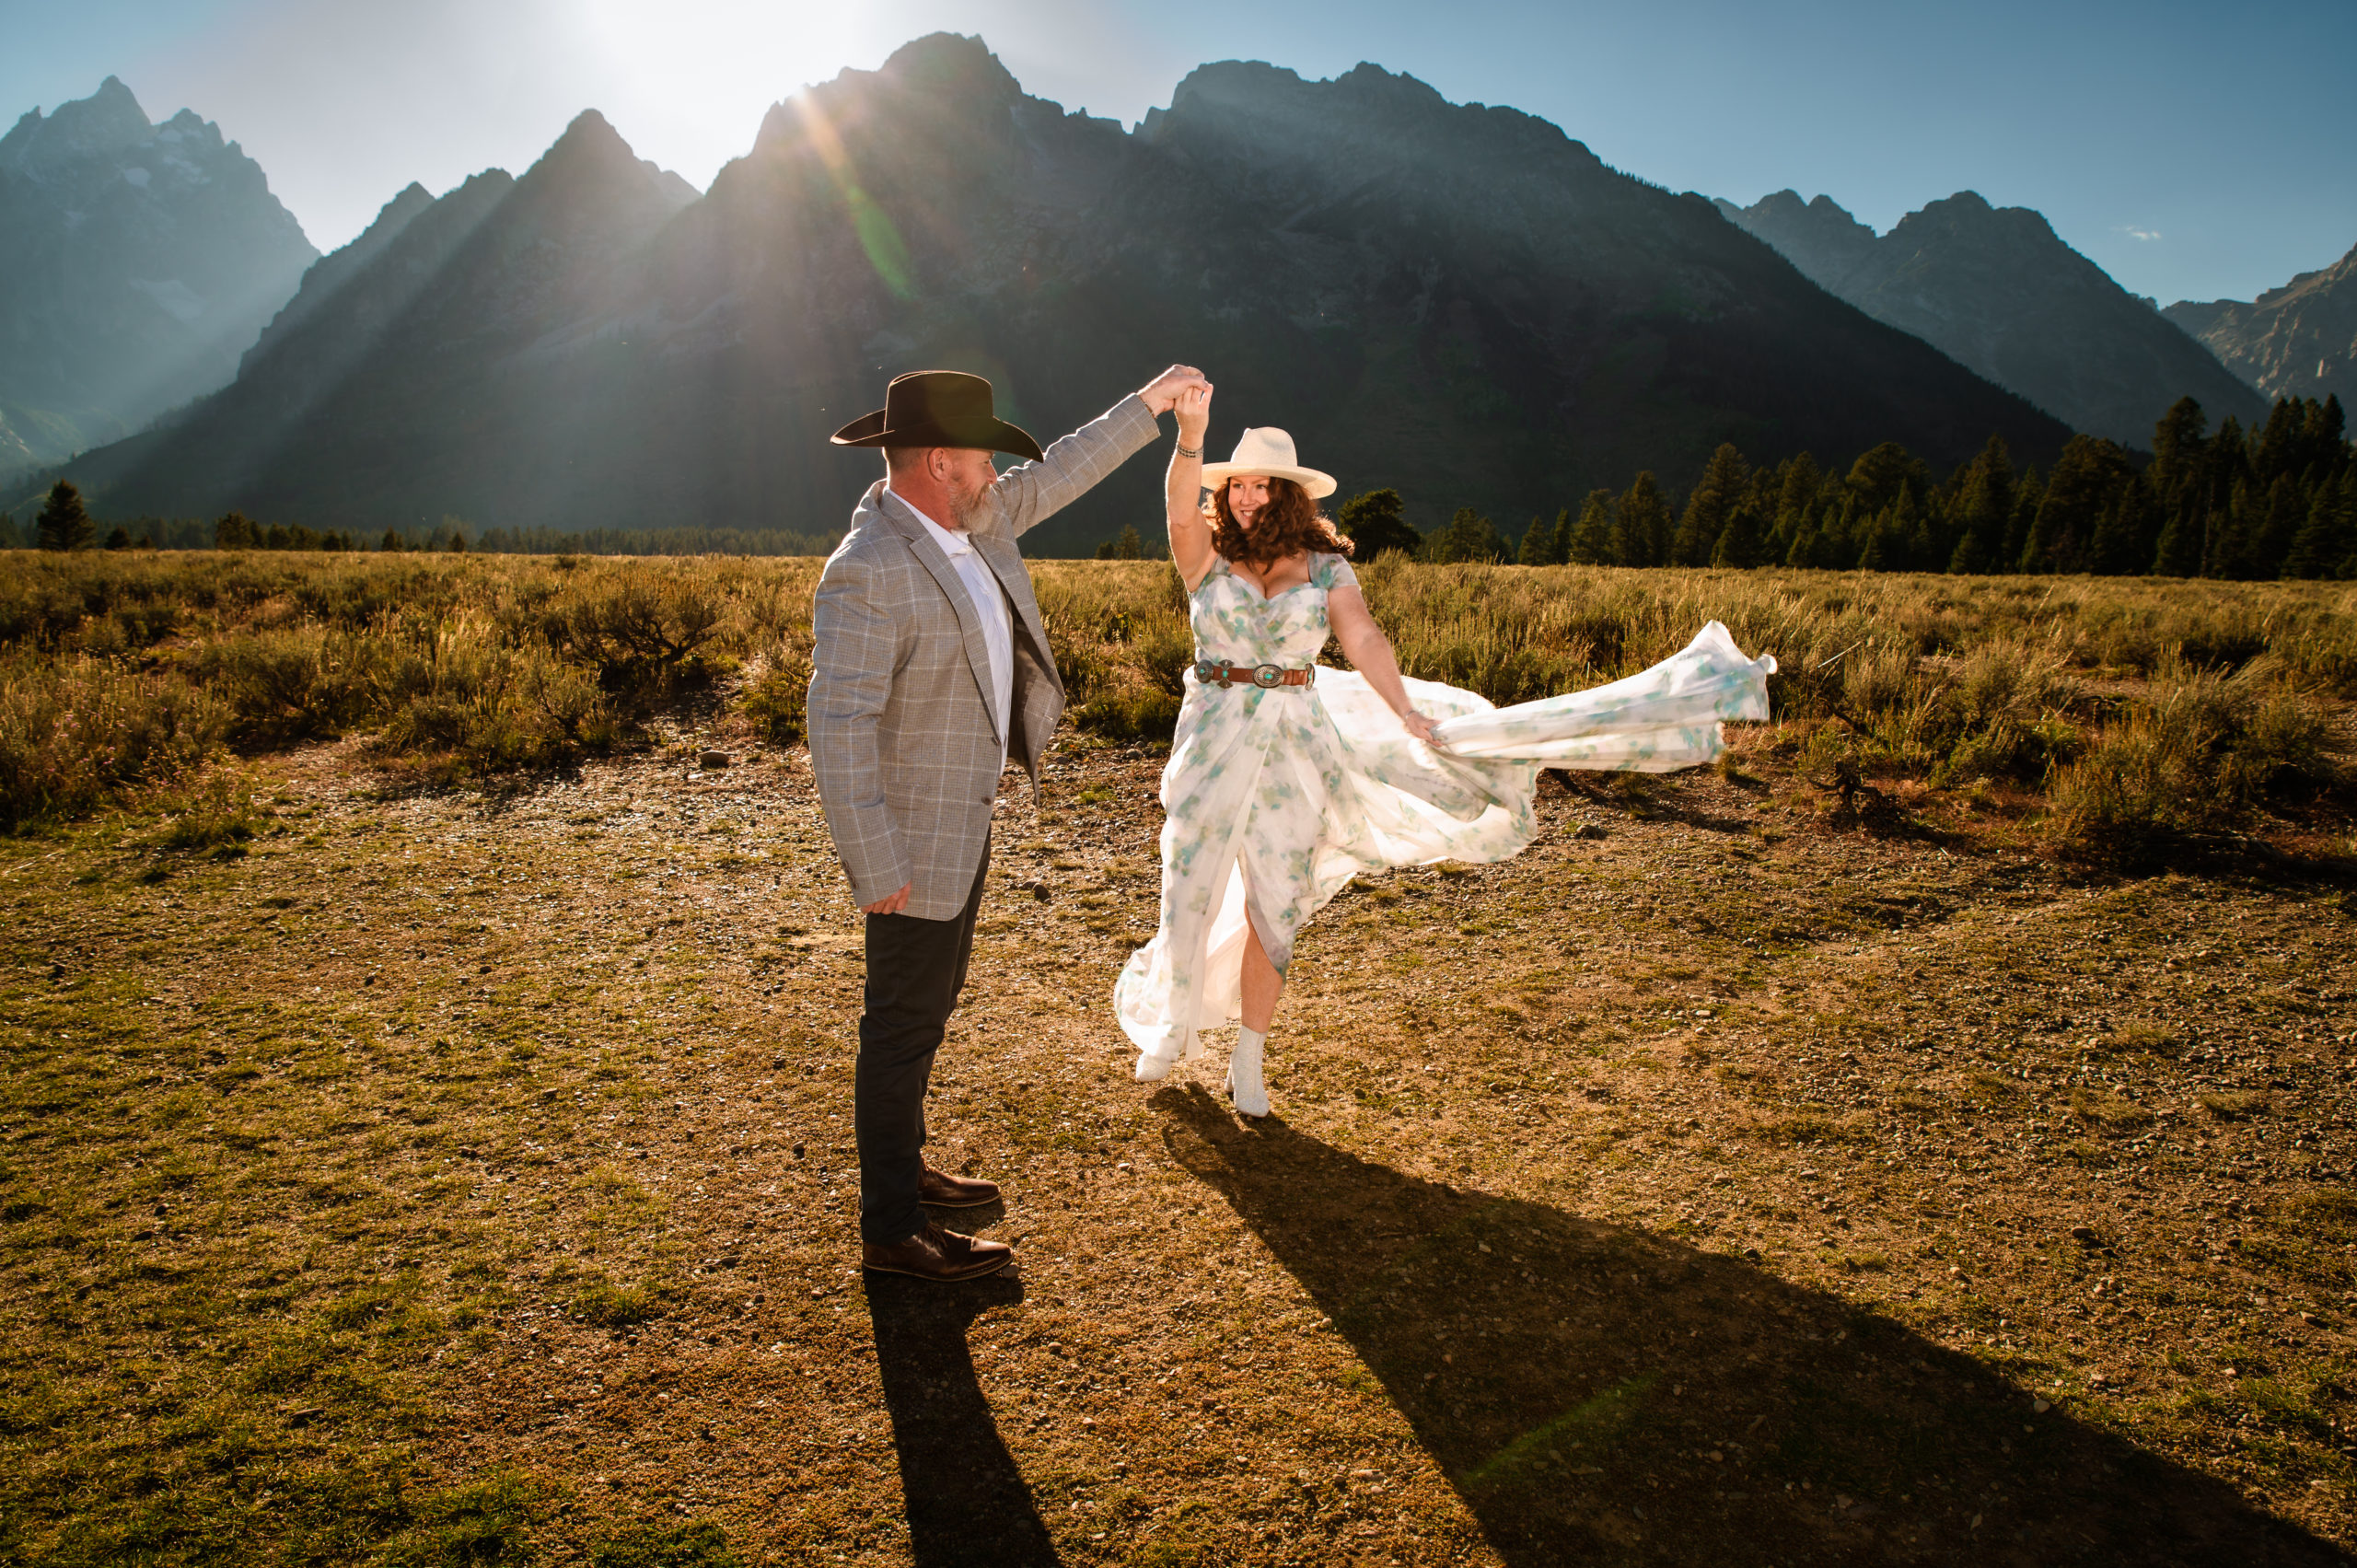 Jackson Hole wedding photographer captures bride and groom dancing together in Grand Teton National Park wedding